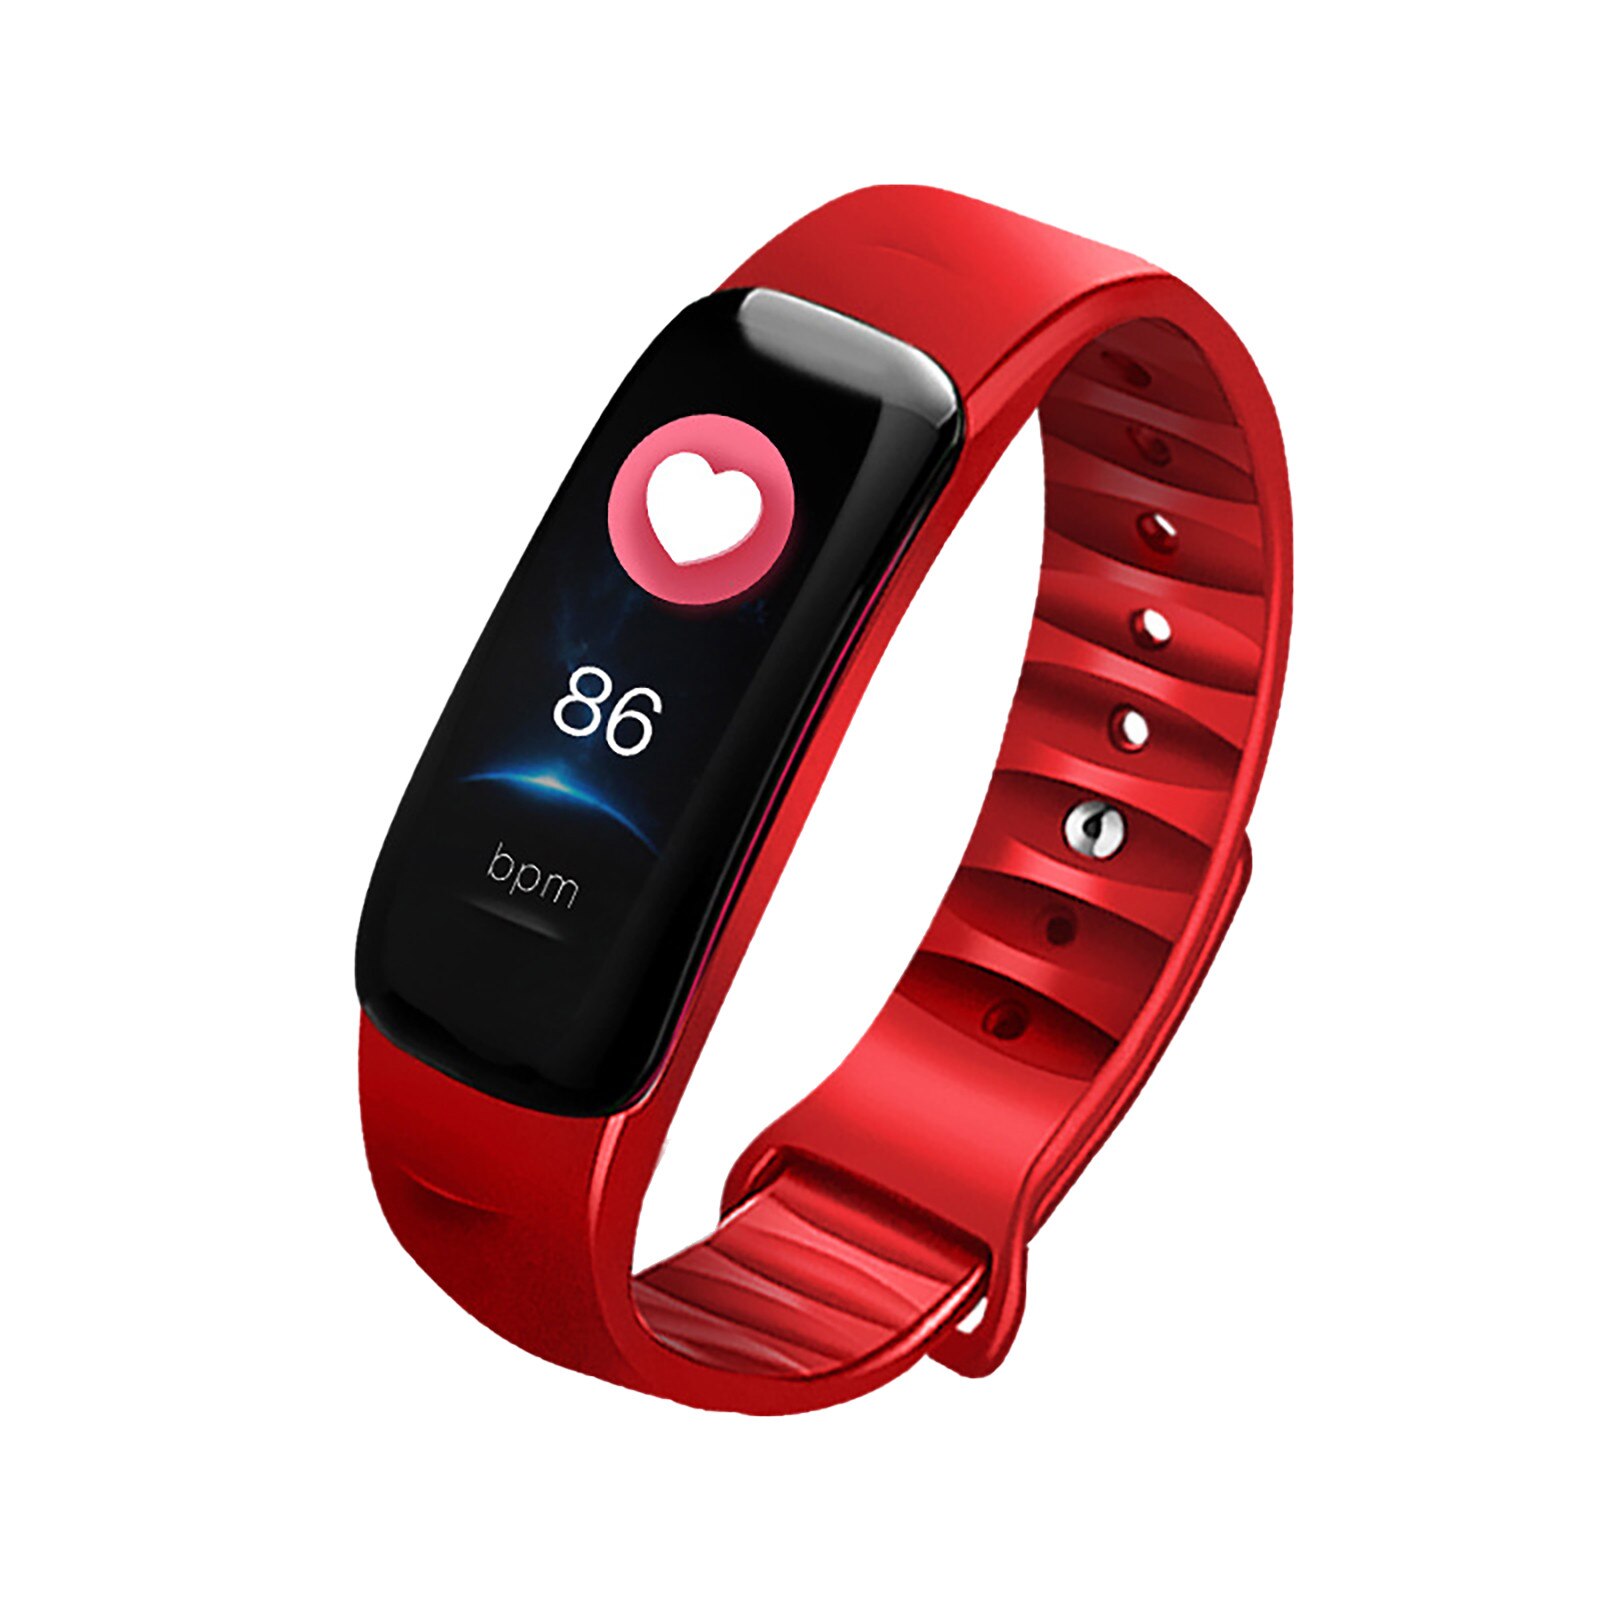 Sport Smart Wrist Watch Bracelet Display Fitness Gauge Step Tracker Digital LCD Pedometer Run Step Walking Calorie Counter: Red